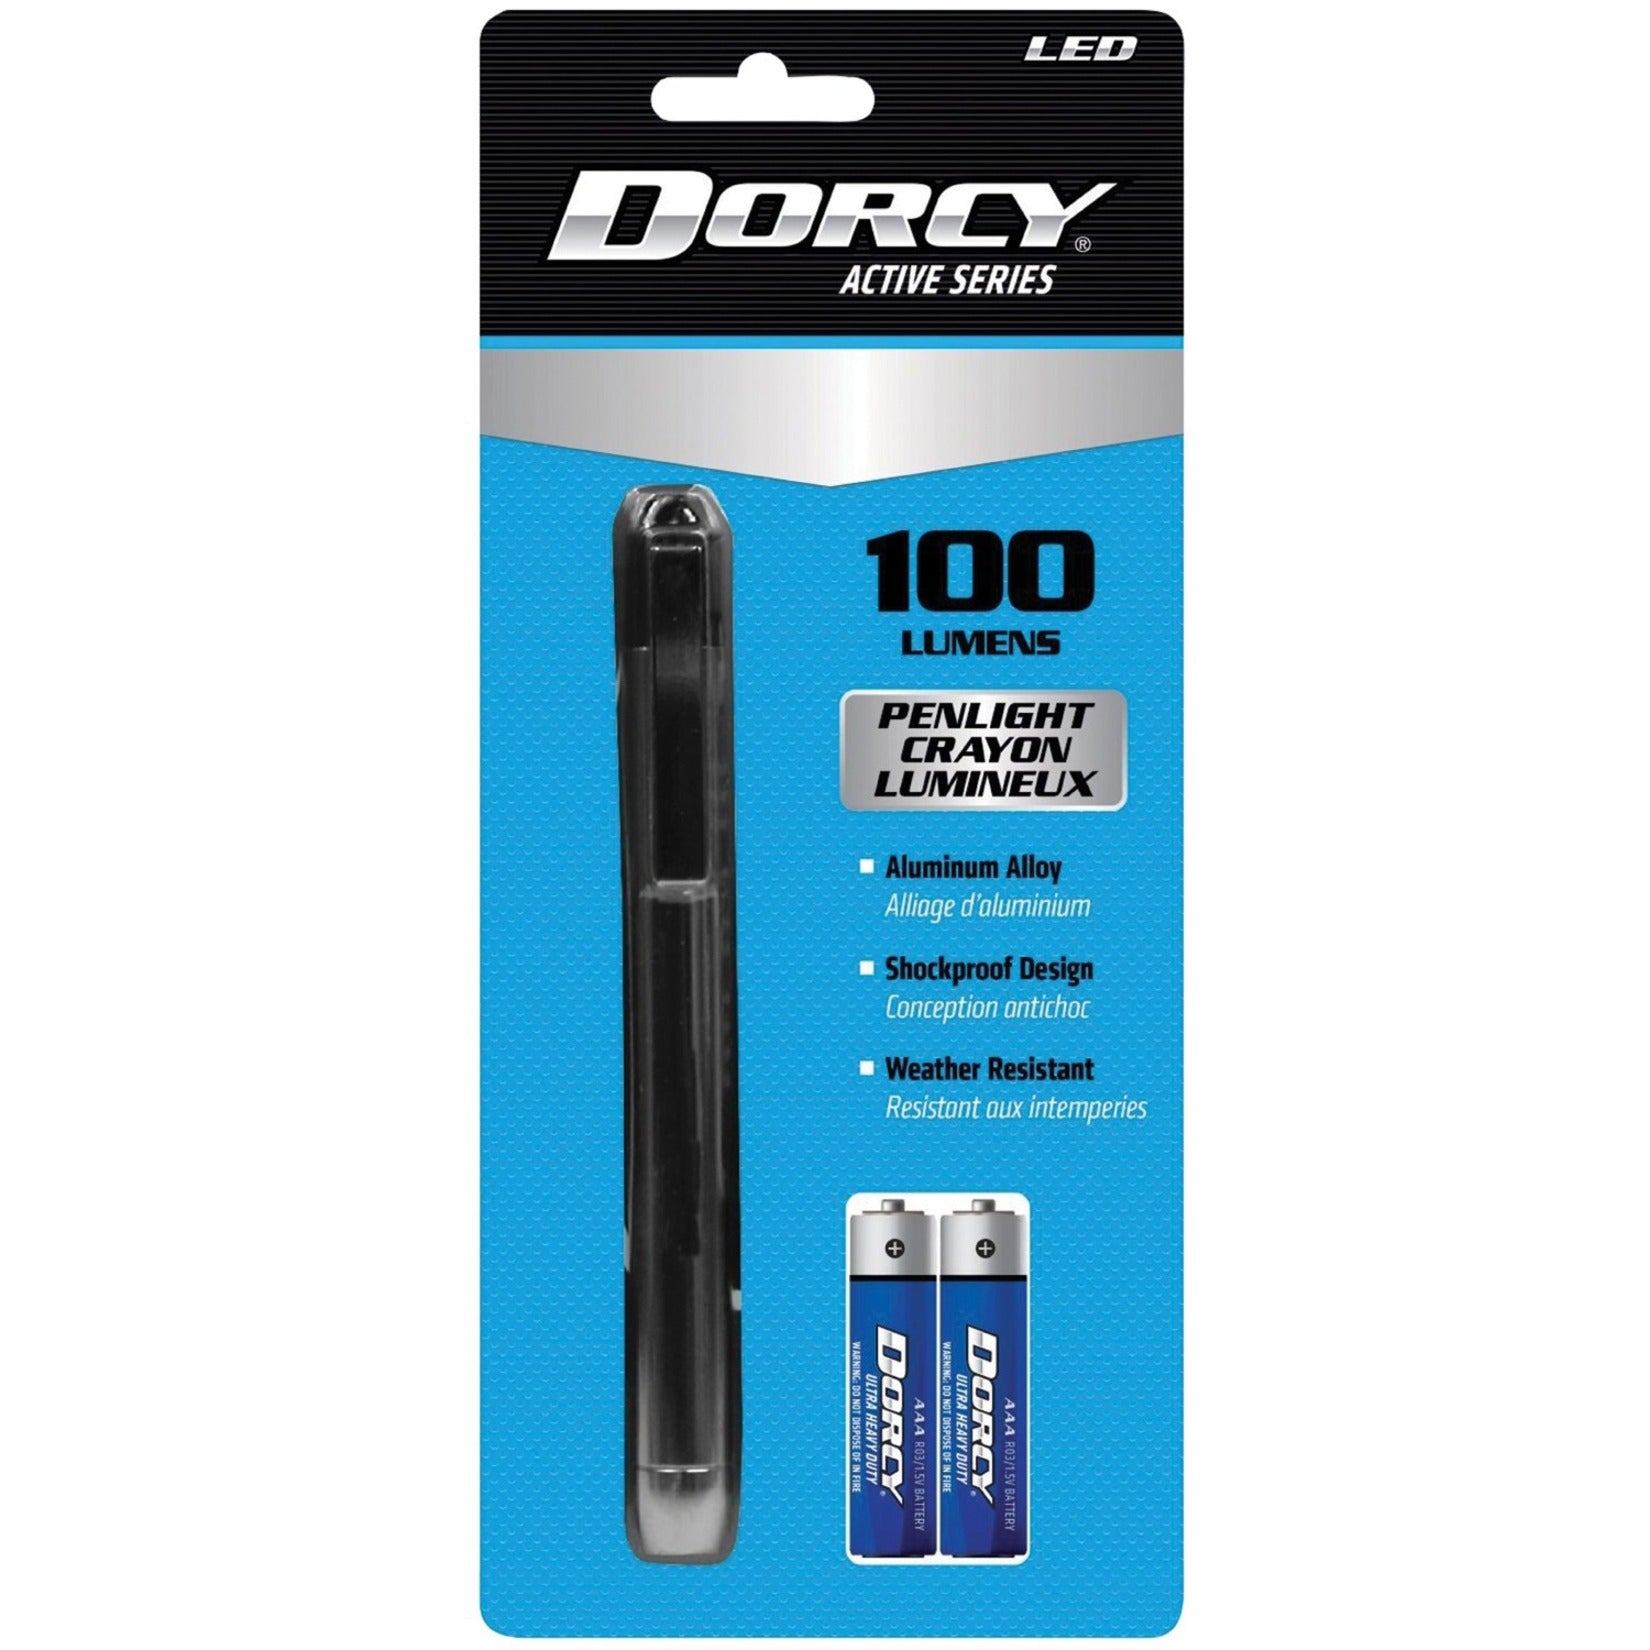 Dorcy 41-1218 5MM LED Penlight, Aluminum Silver, Lightweight, Rear Switch, Pocket Clip